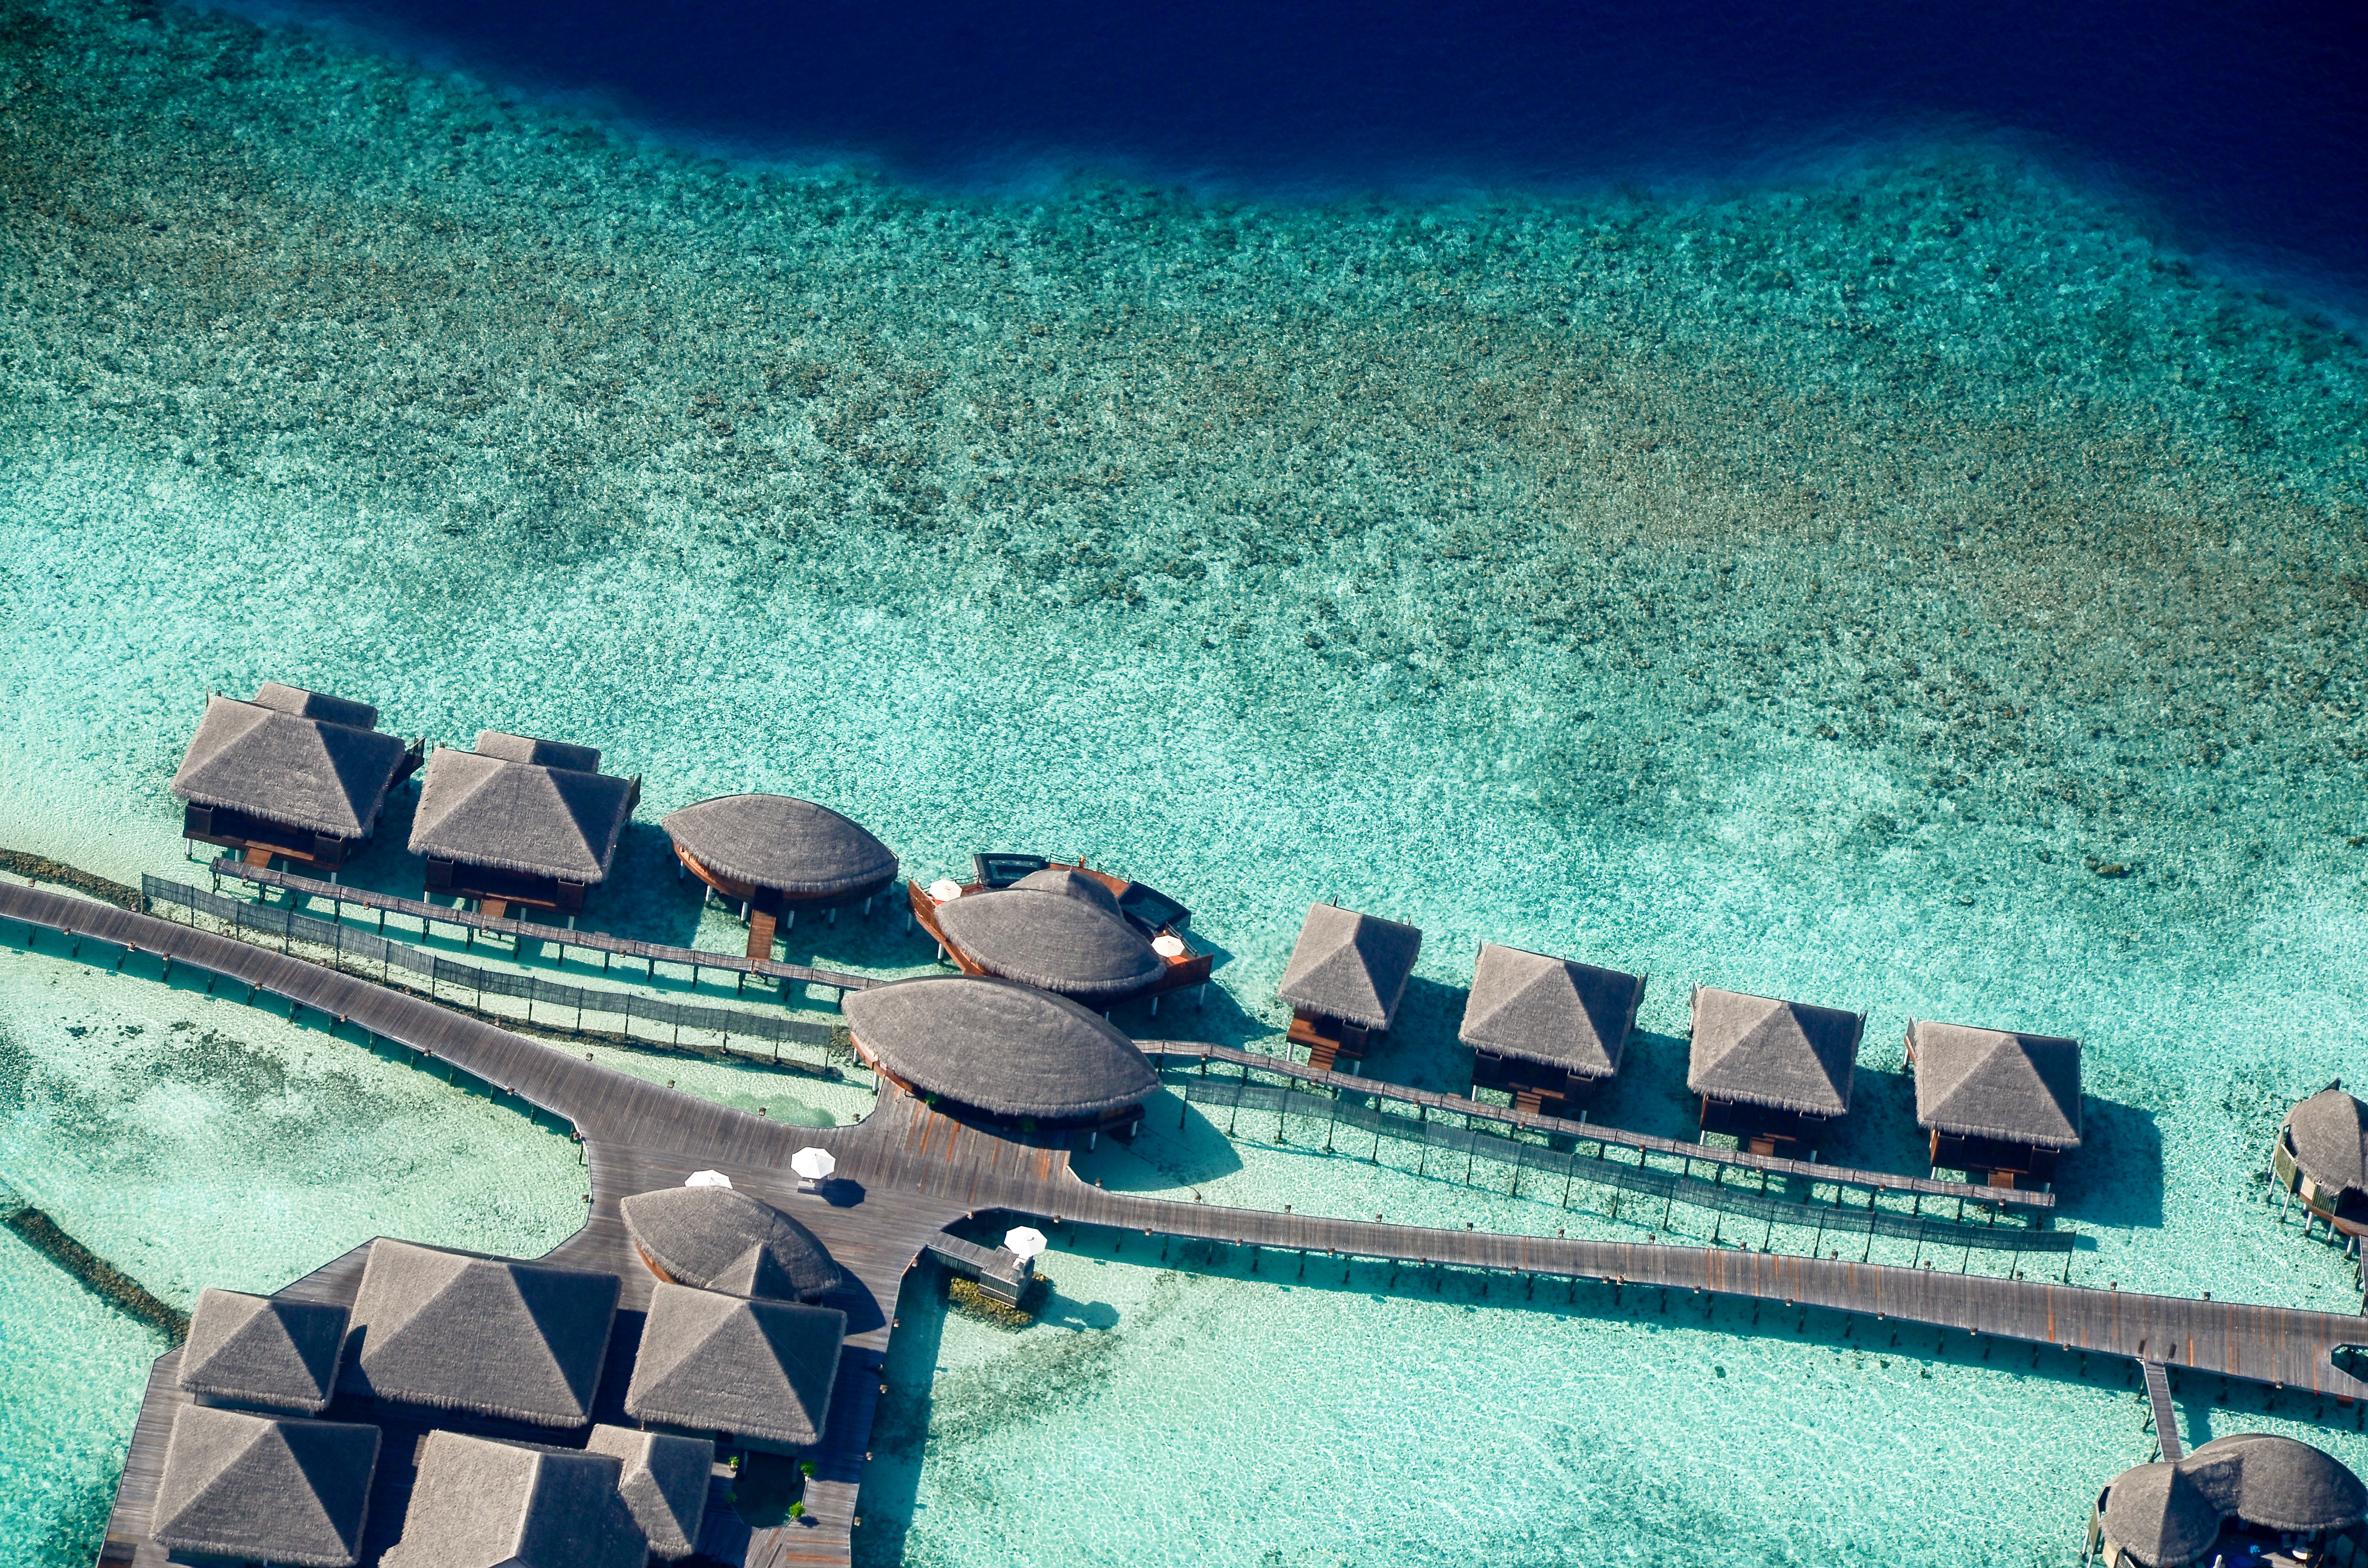 Velassaru Resort Maldives